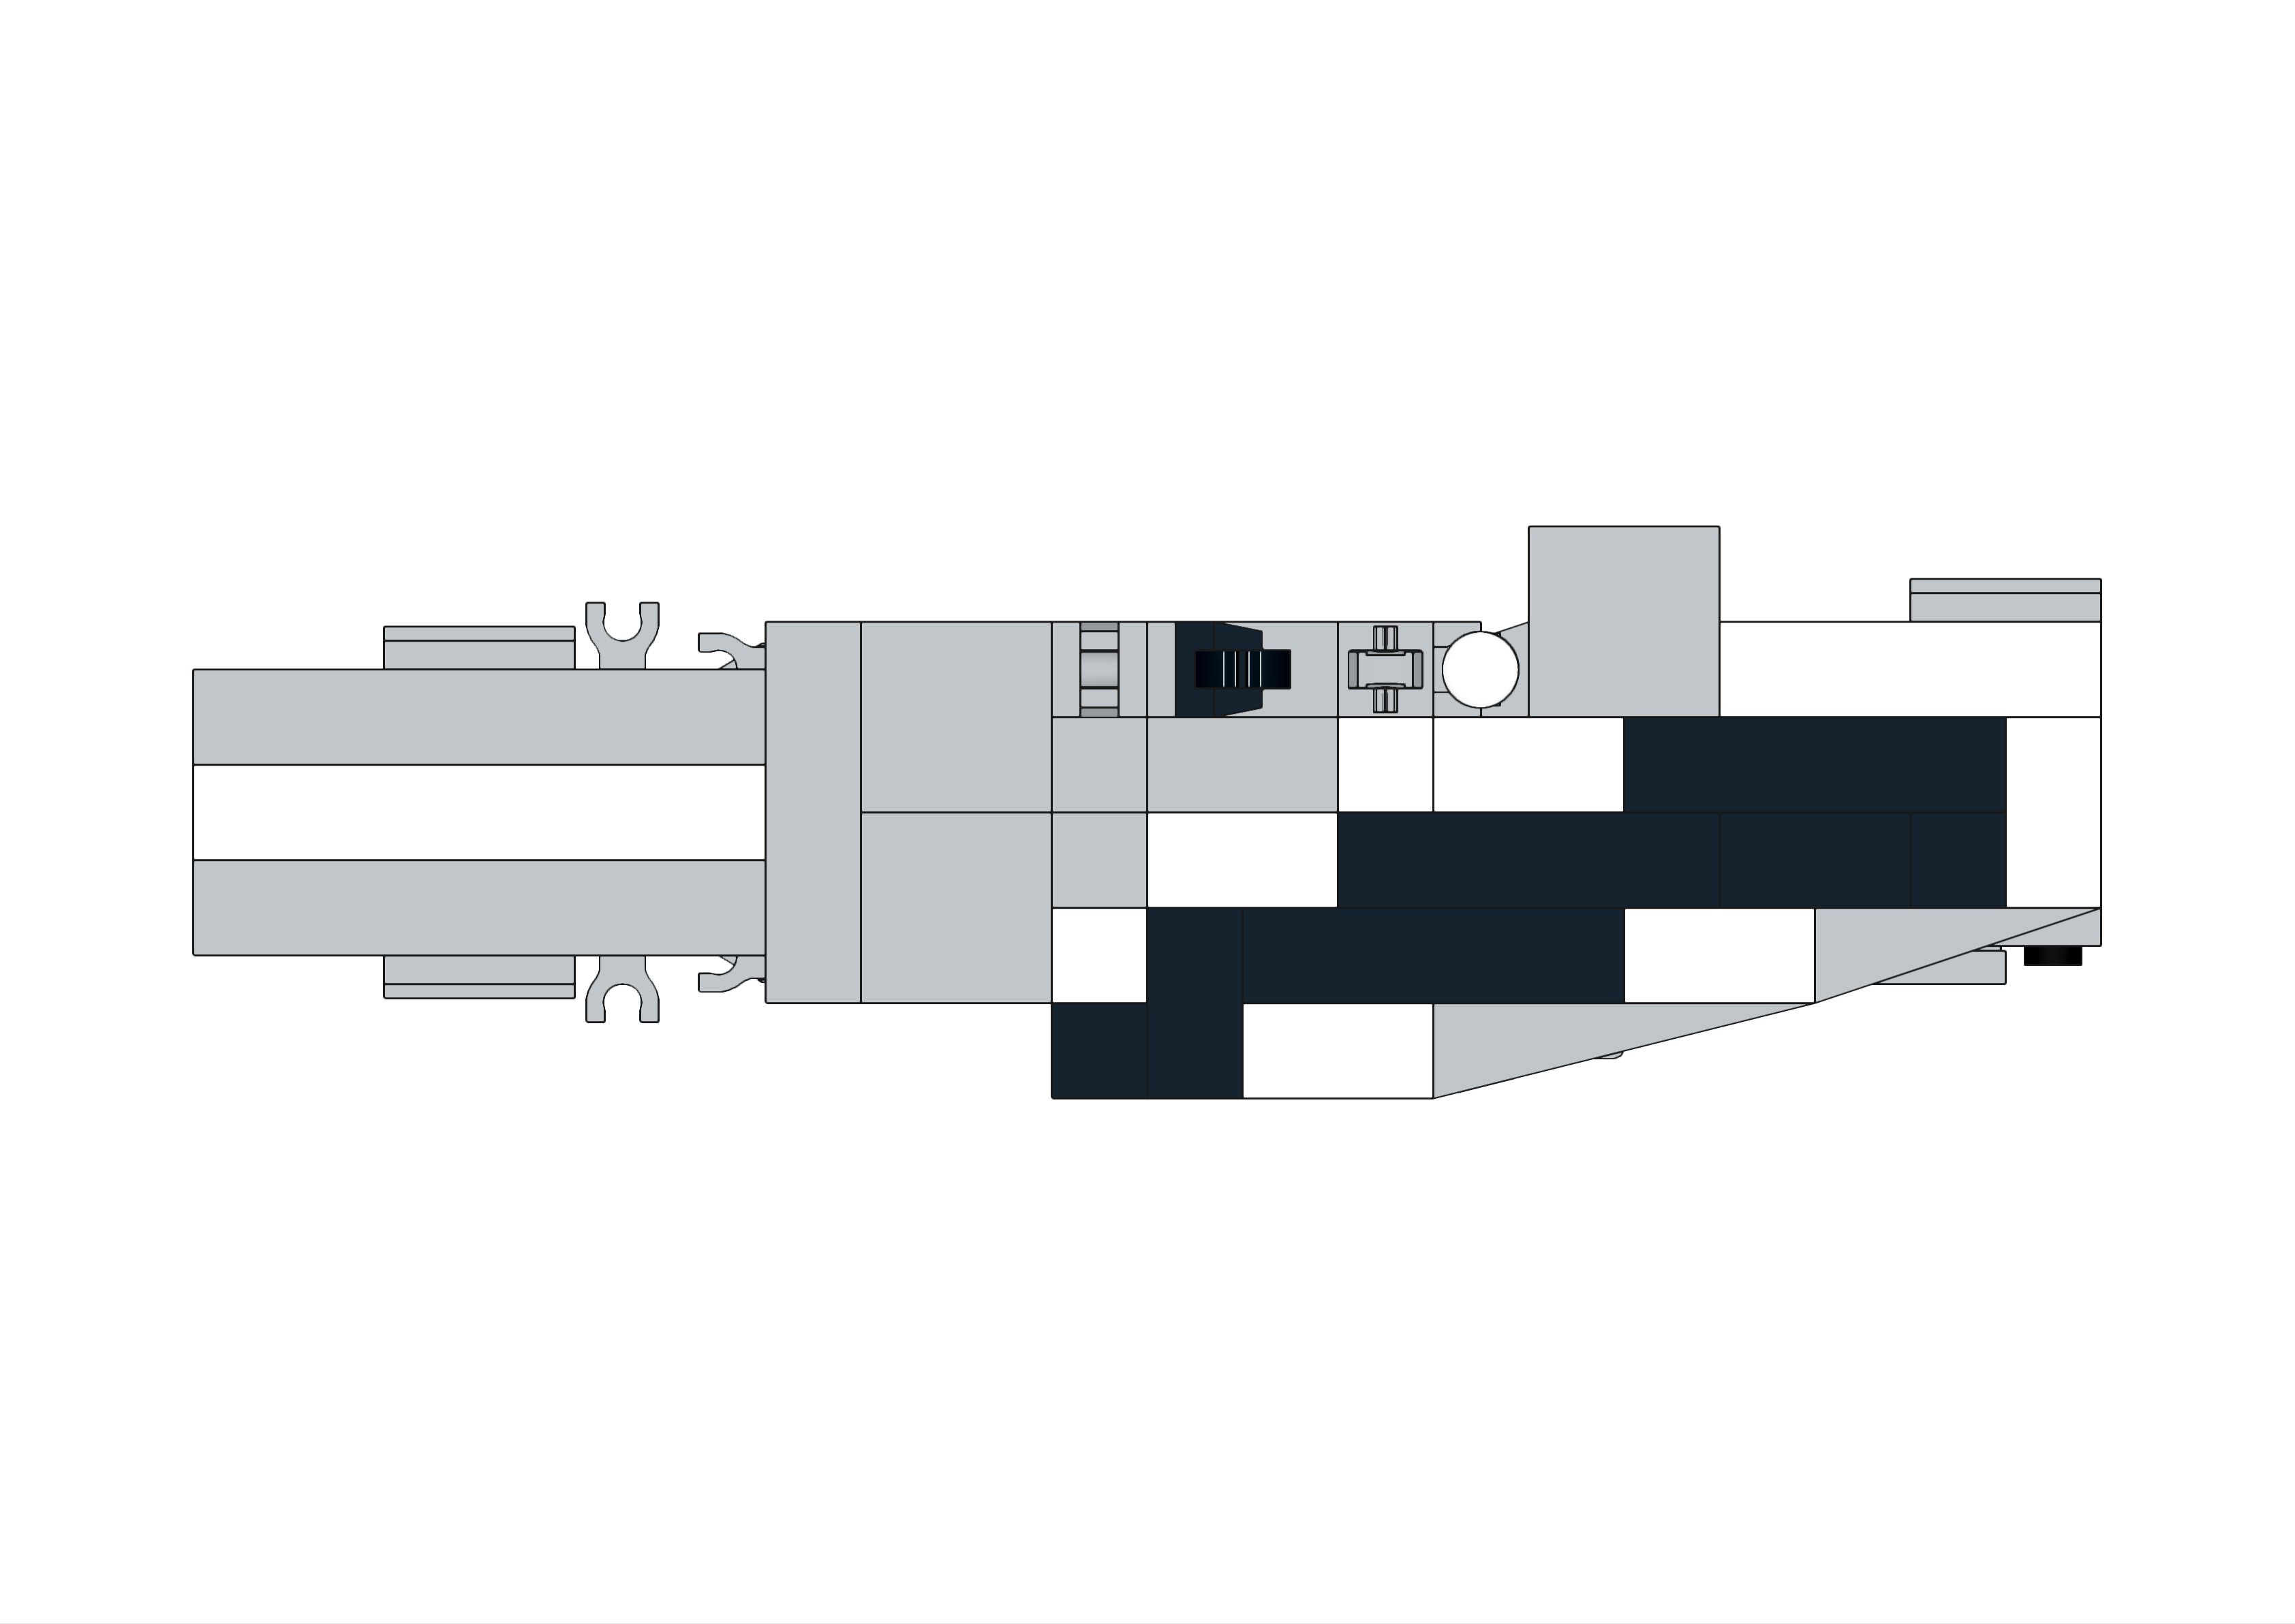 Top view image of the LEGO USS Lexington (CV-16) Aircraft Carrier MOC.